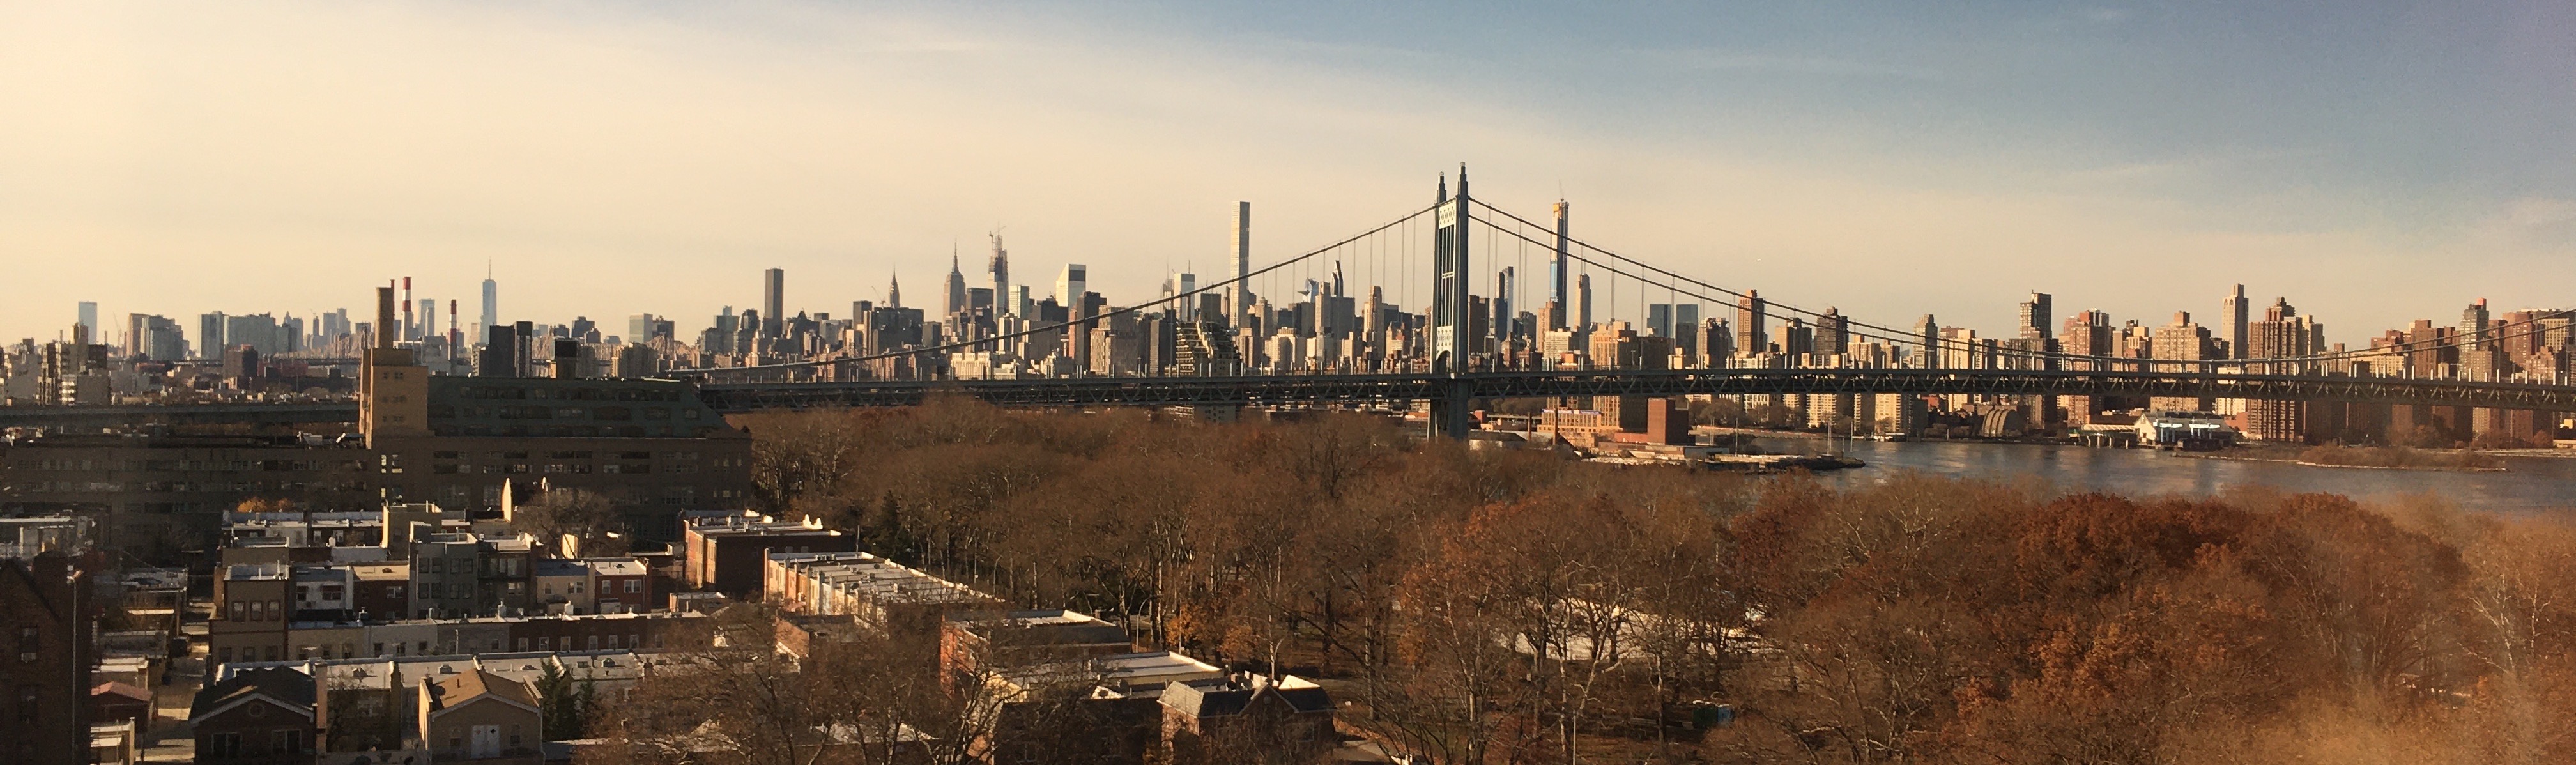 Photograph of the New York skyline.